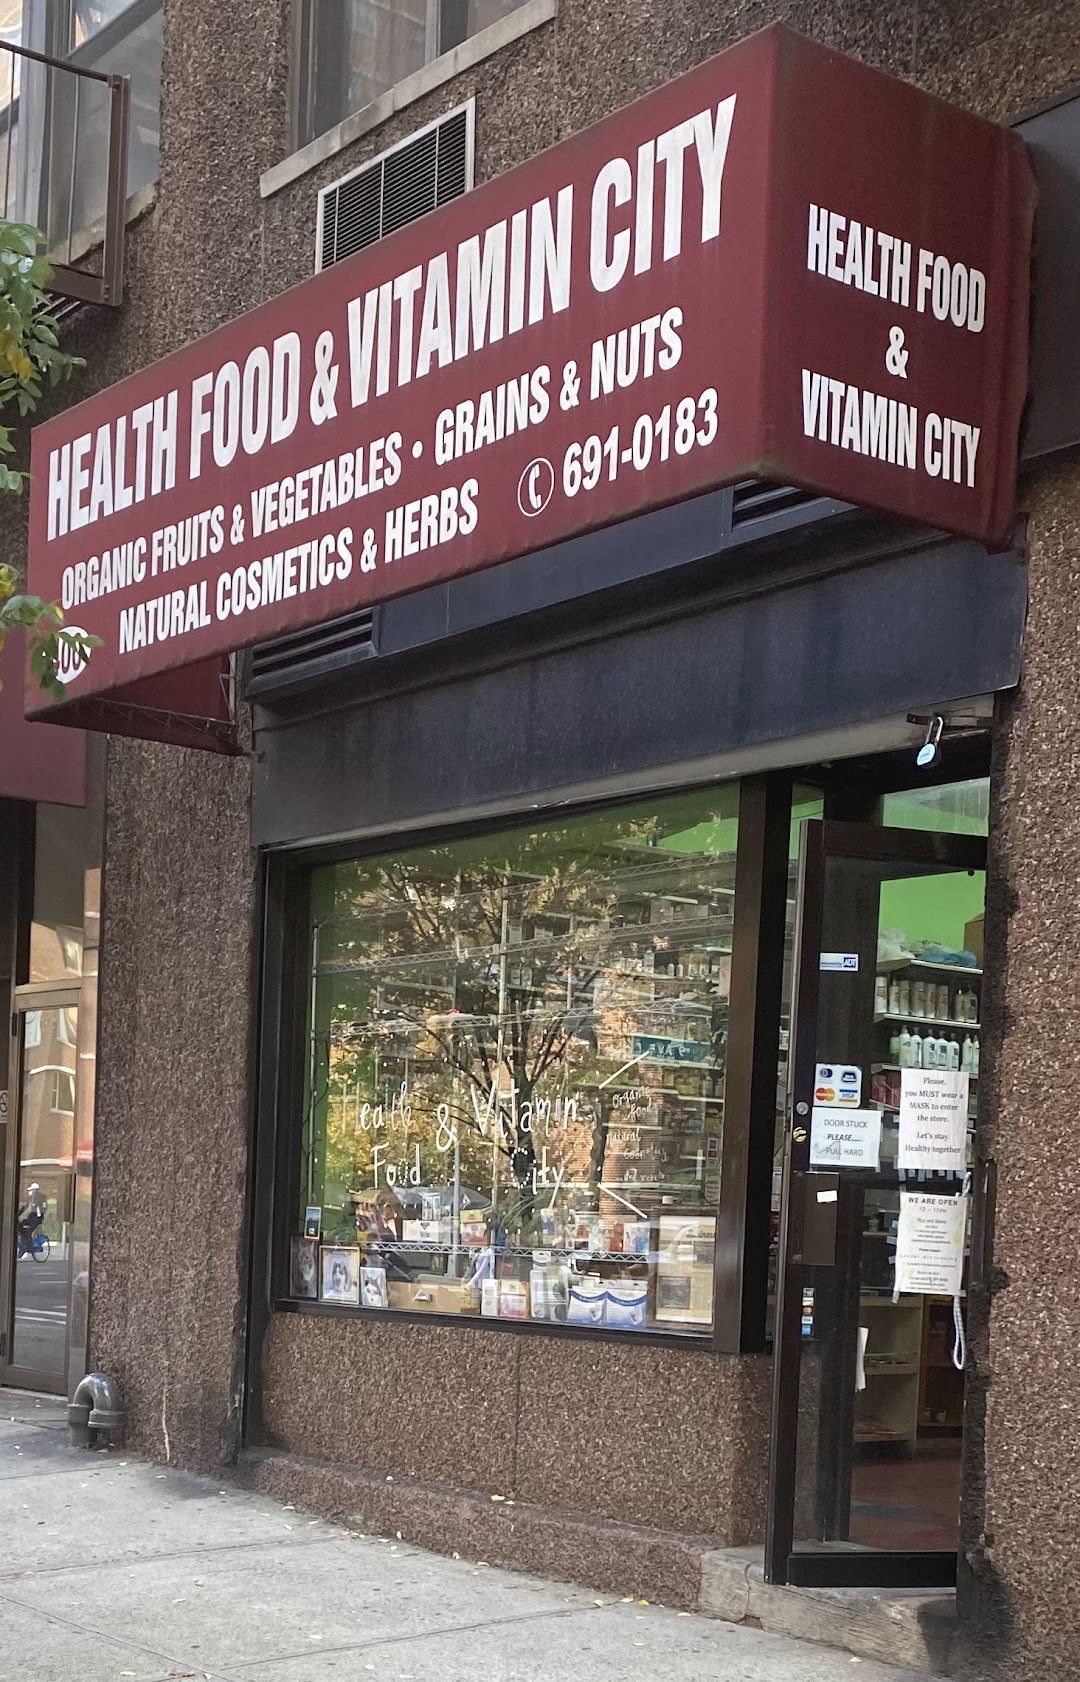 Health Food & Vitamin City